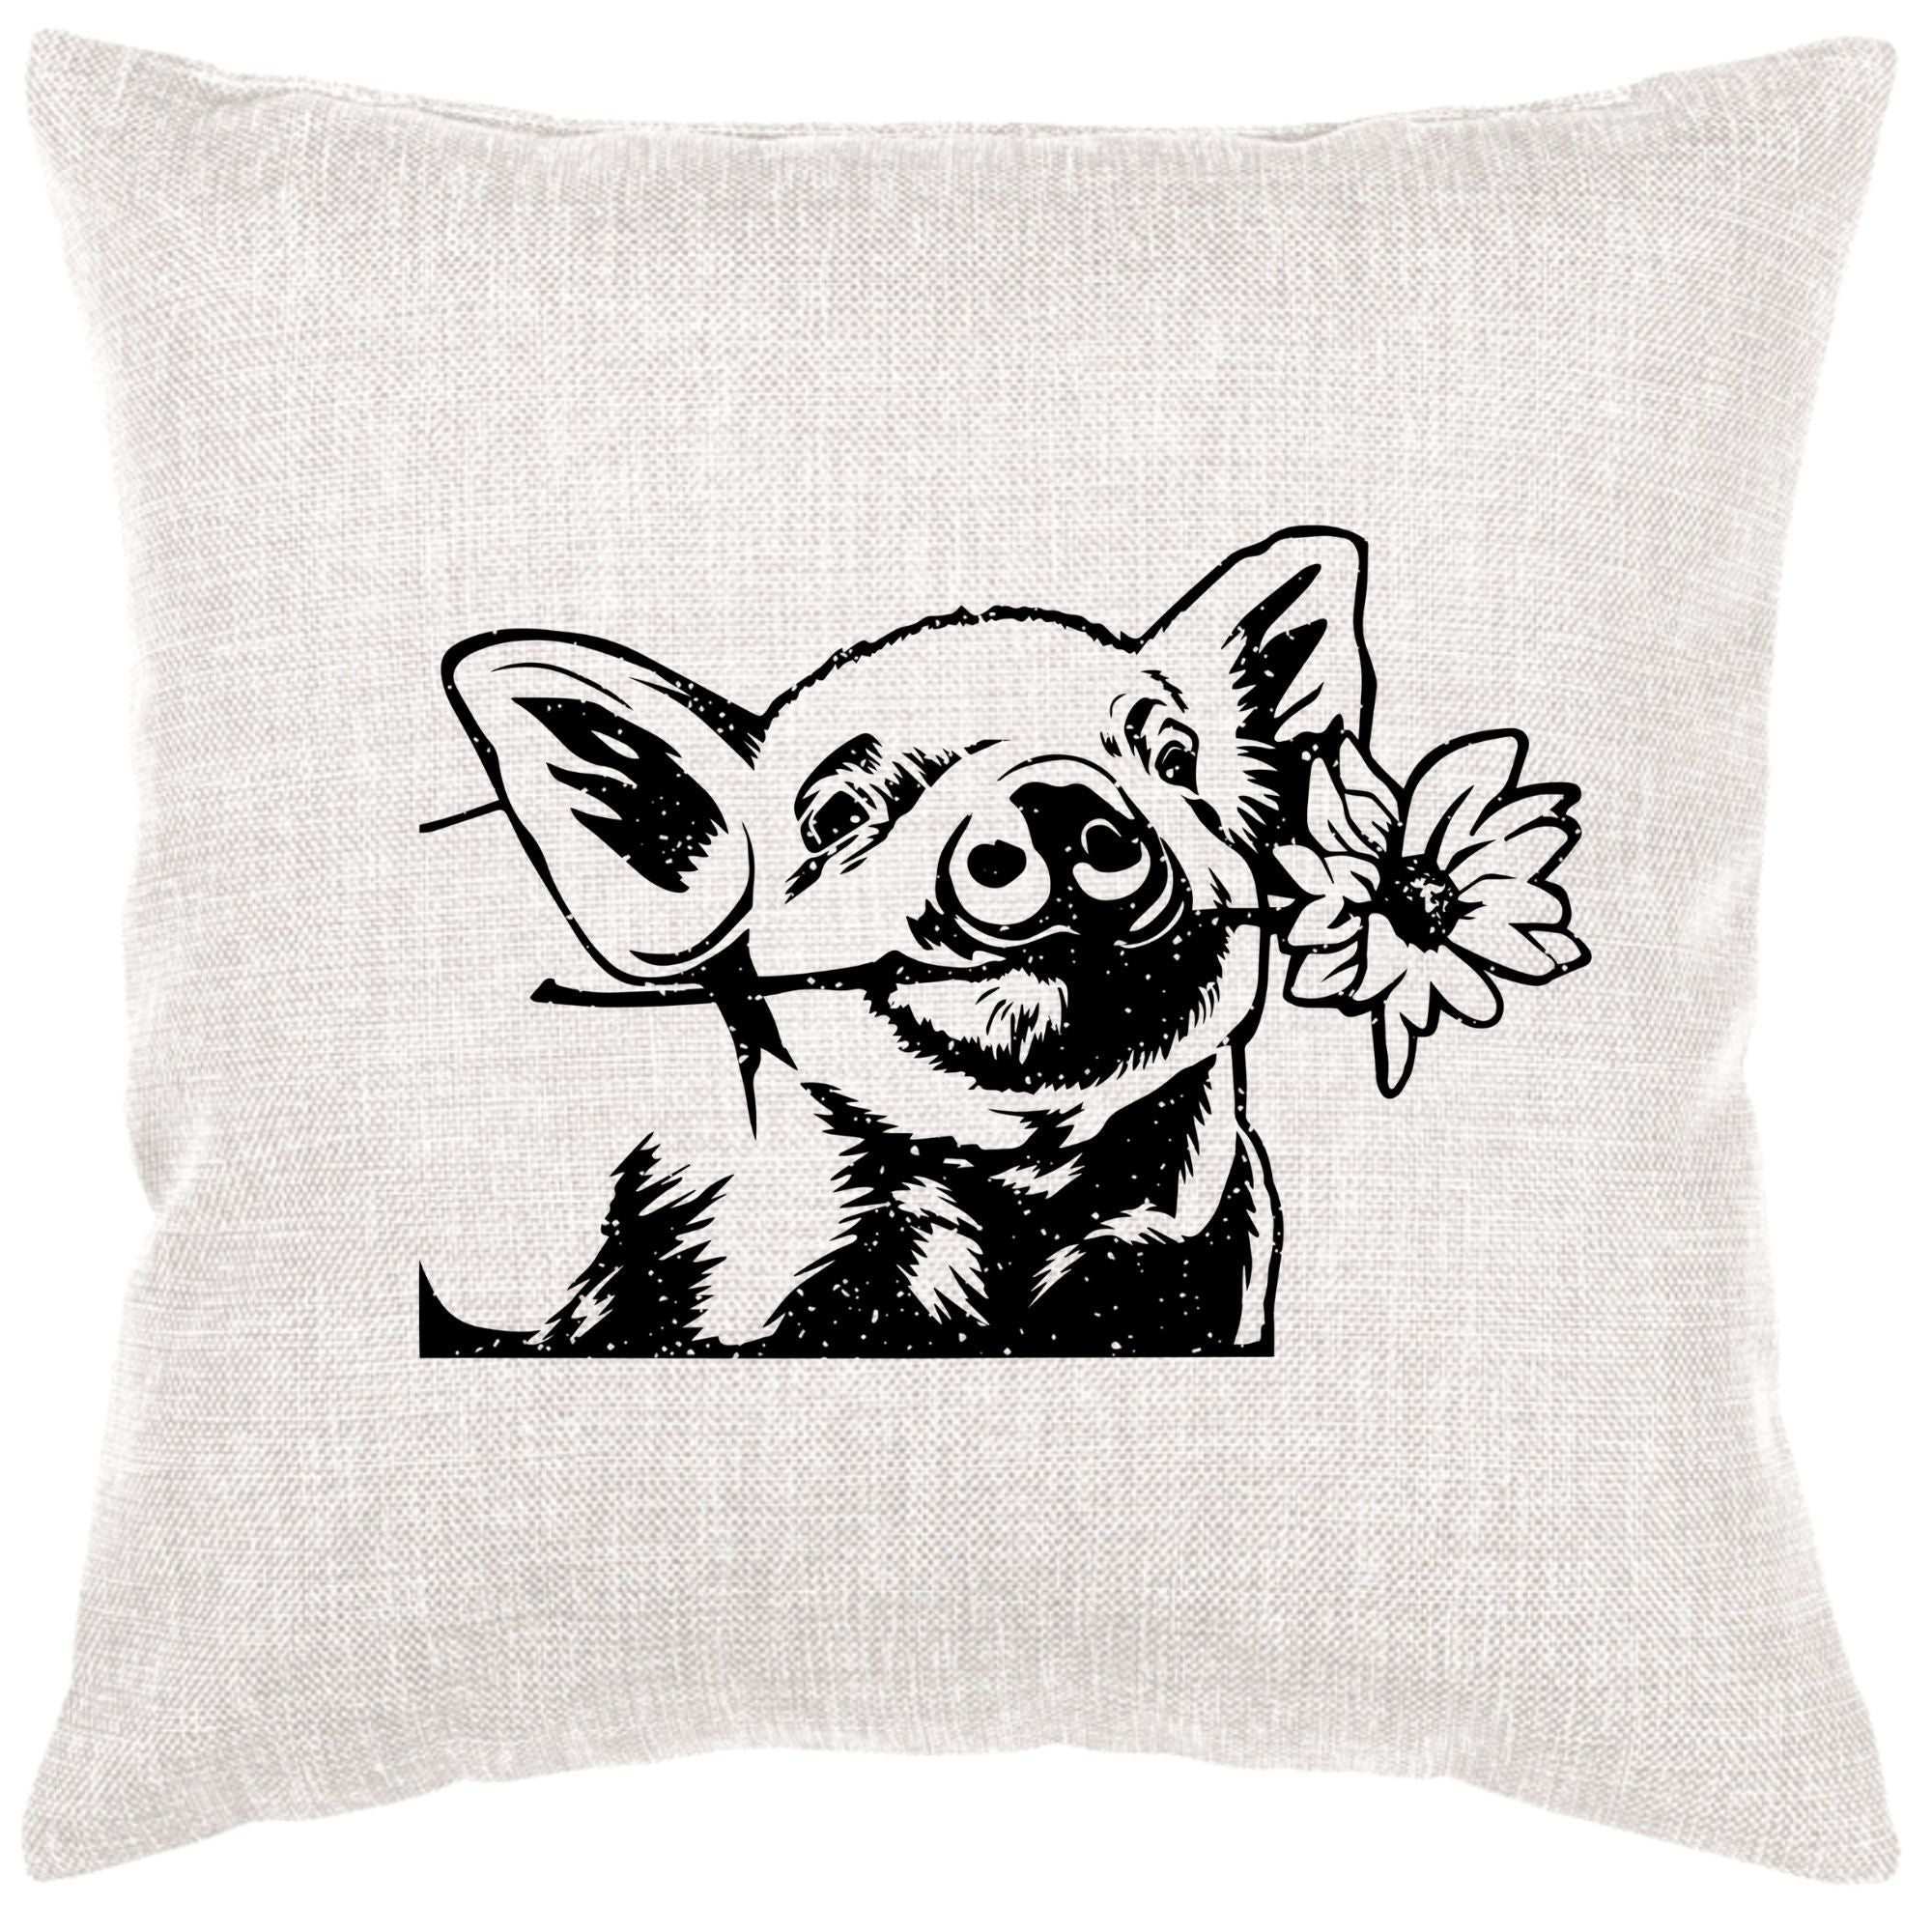 Curious Pig Down Pillow